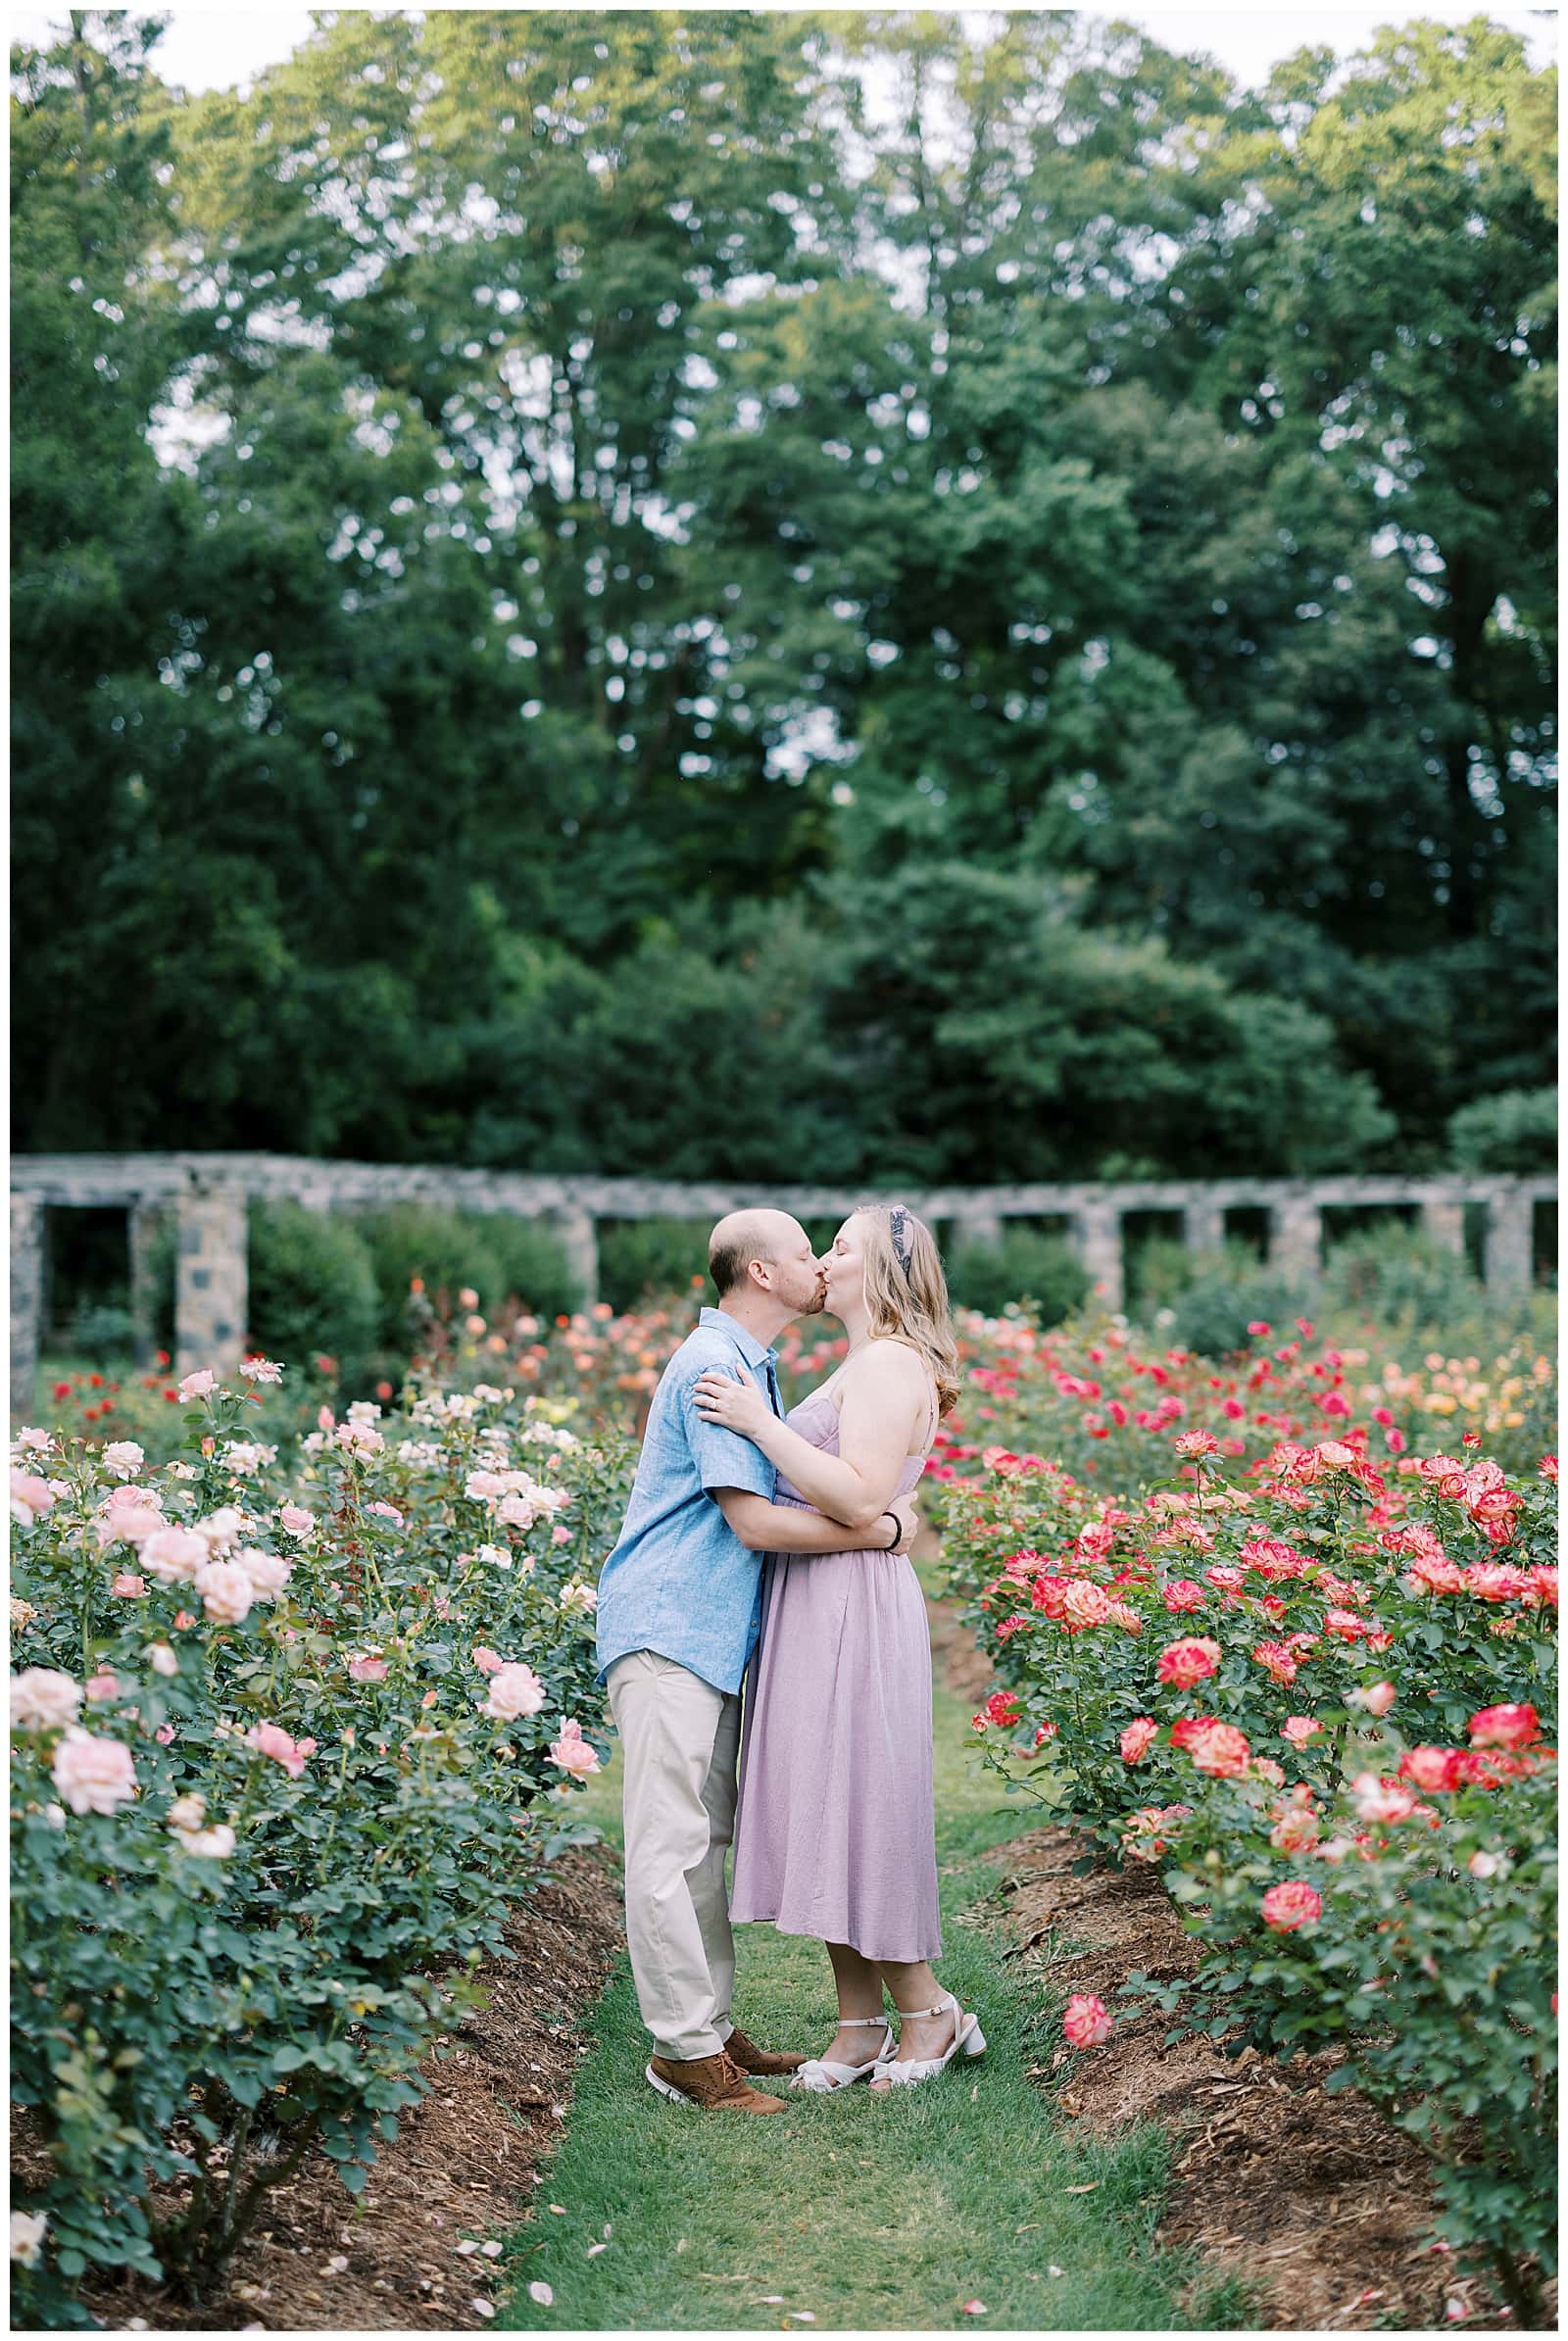 Danielle-Defayette-Photography-Raleigh-Rose-Garden-Engagement-Photos_0013.jpg